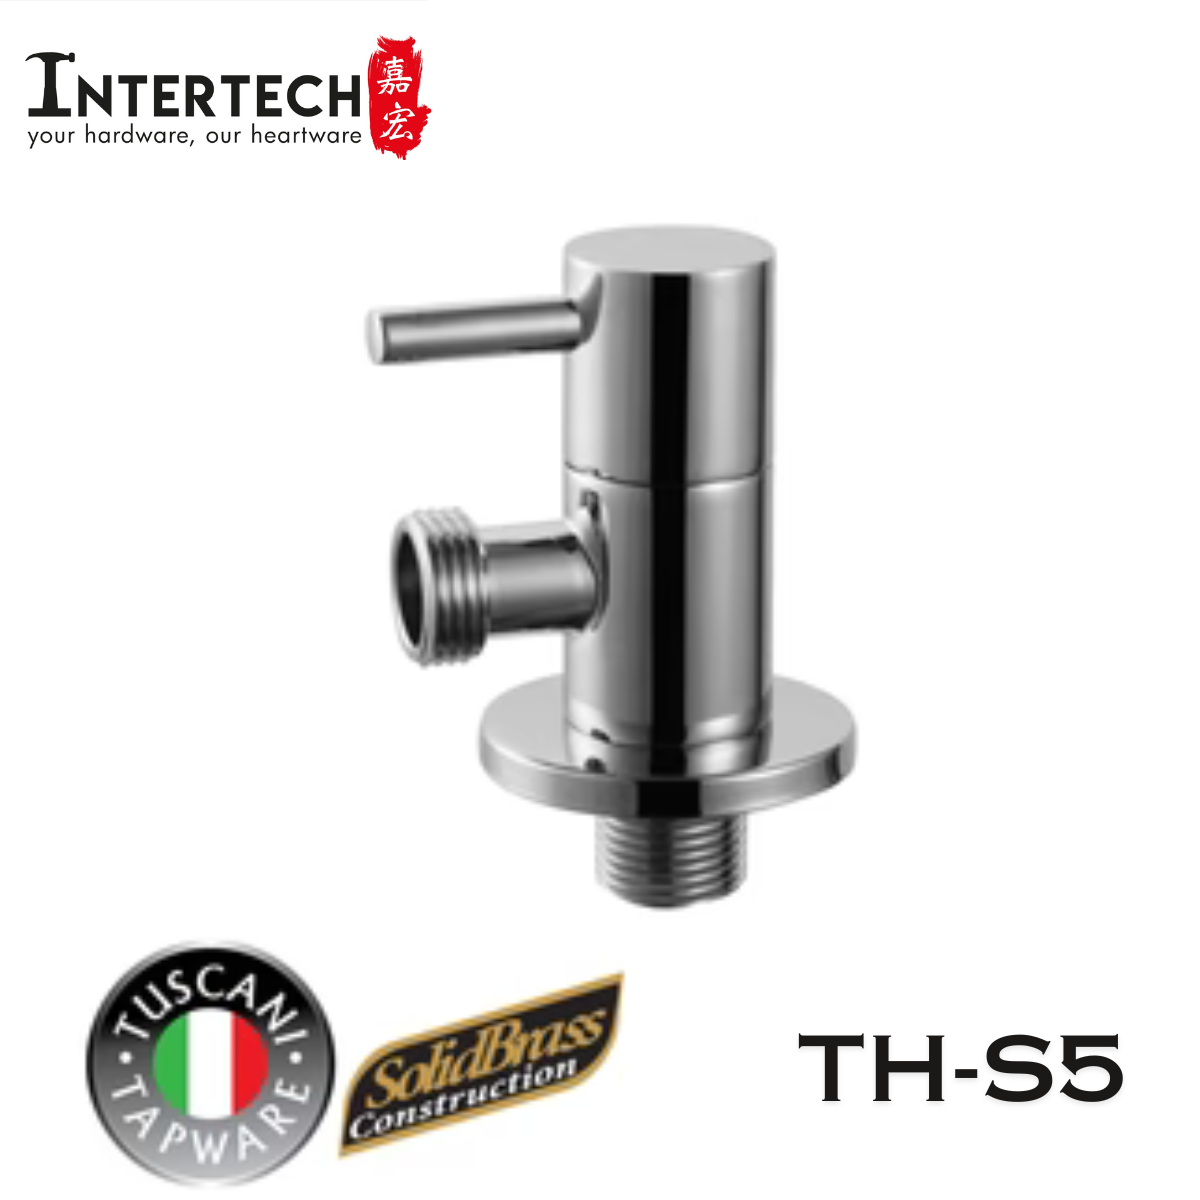 Tuscani Tapware TH-S5 - HYDROSMITH Series Angle Valve - Cold Taps